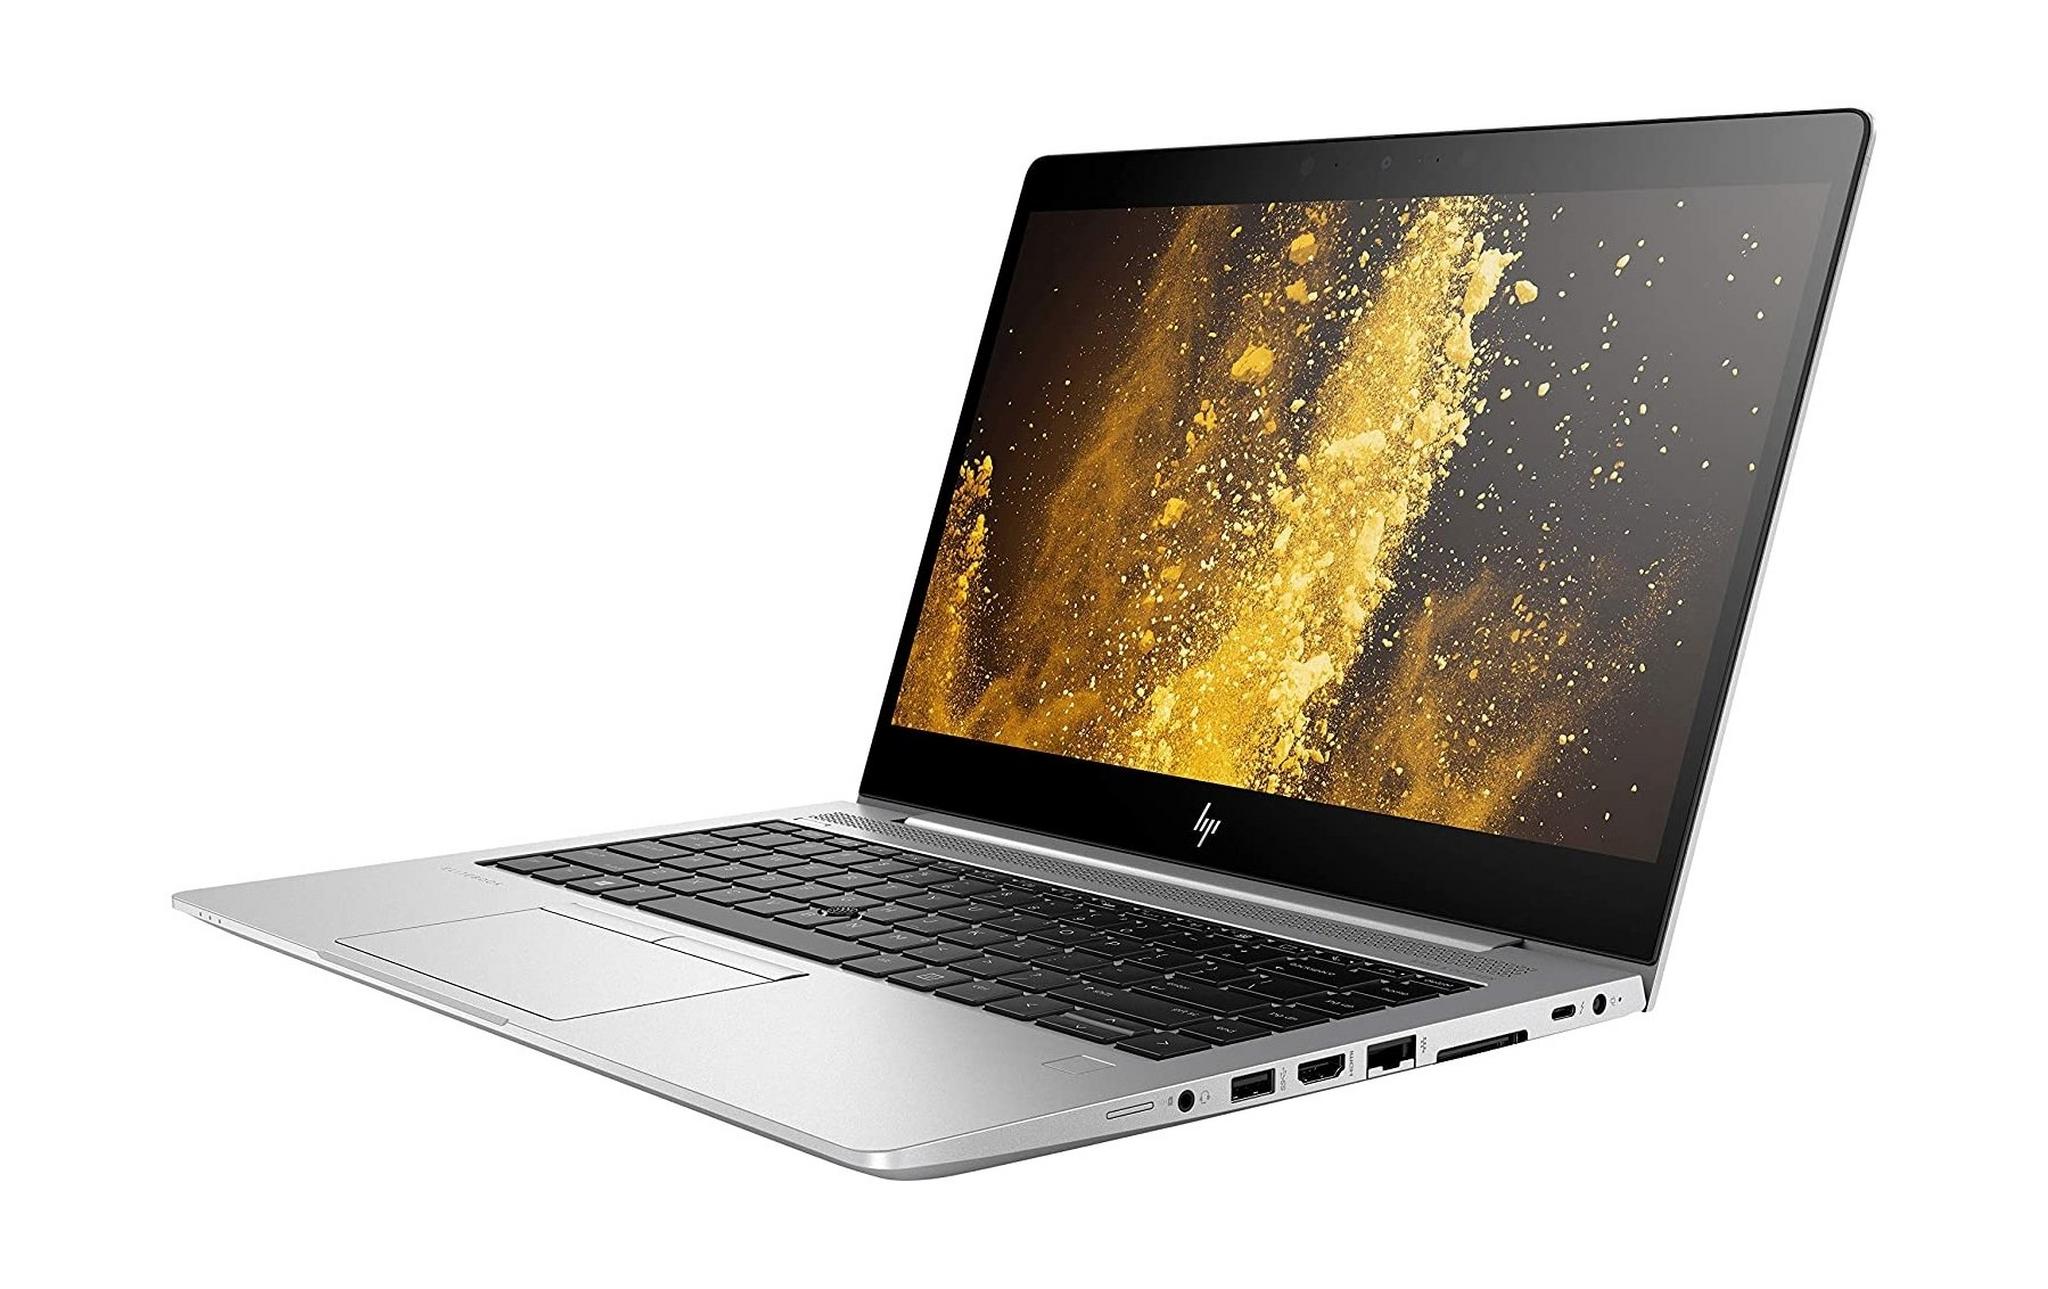 HP EliteBook 840 Core i5 8GB RAM 256GB SSD 14" SMB Laptop (8MJ68EA#ABV) - Silver